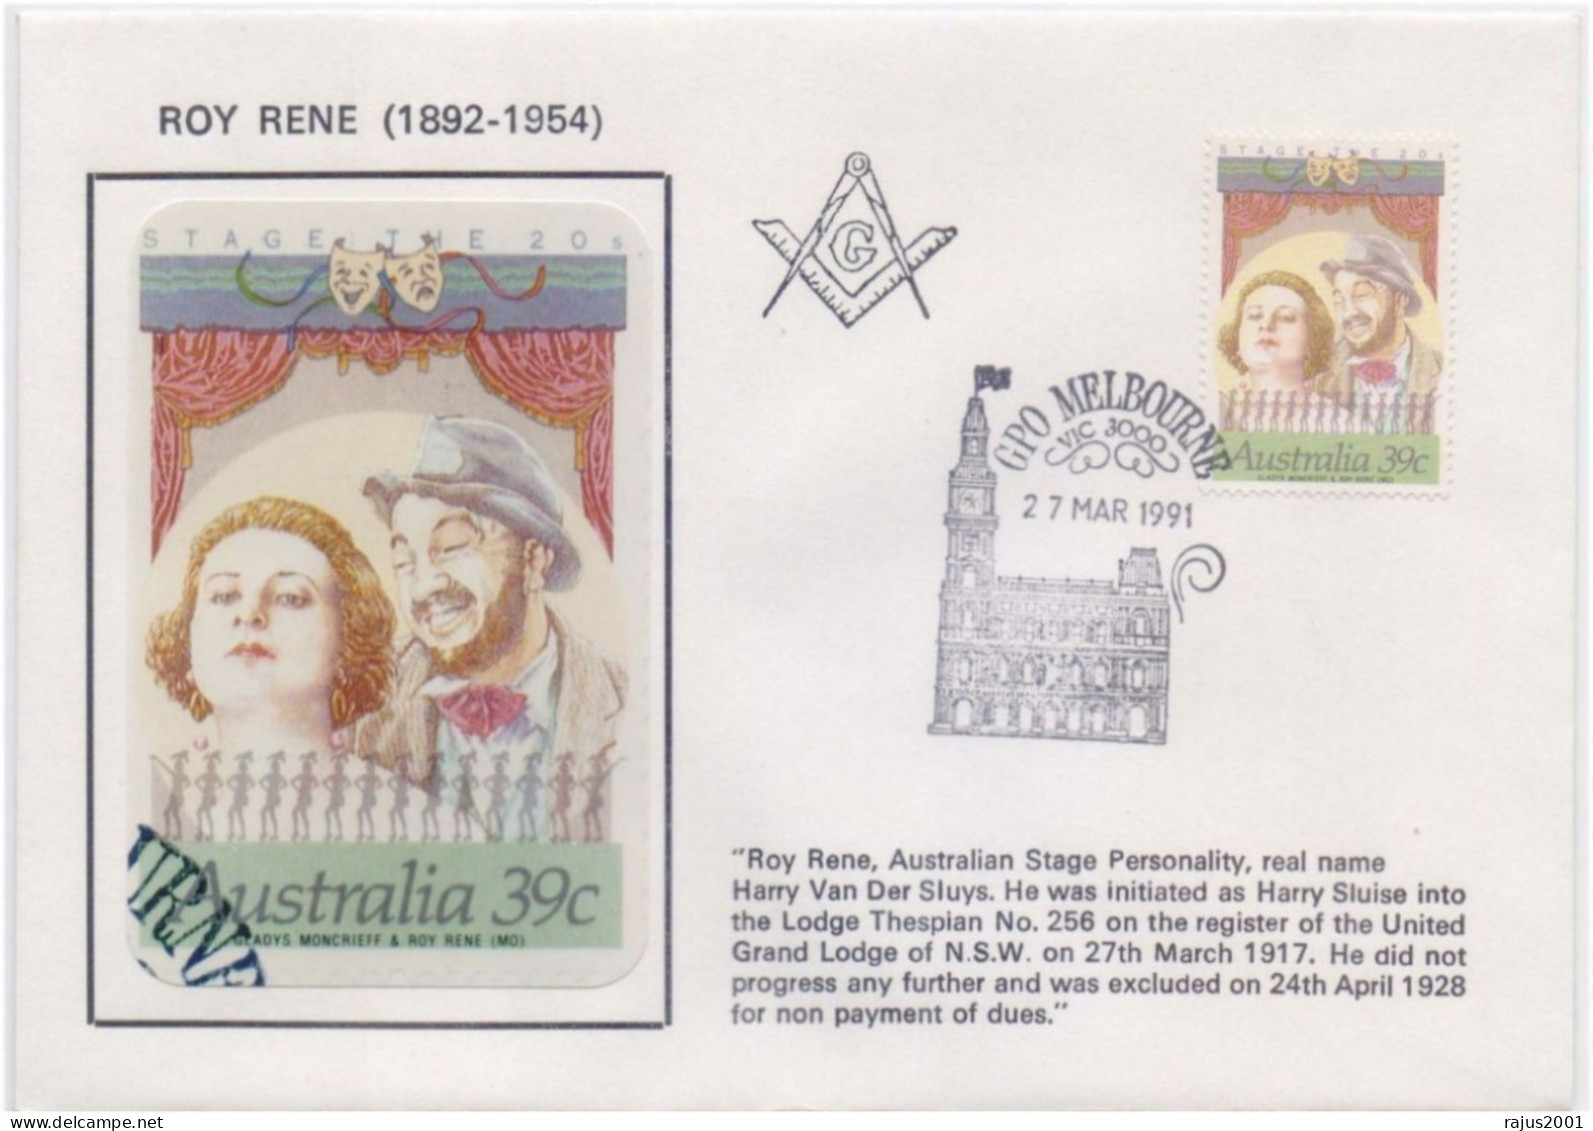 Roy Rene Australian Stage Personality, Thespian Lodge No. 256, Grand Lodge Of N.S.W. Couple, Freemasonry, Masonic Cover - Franc-Maçonnerie